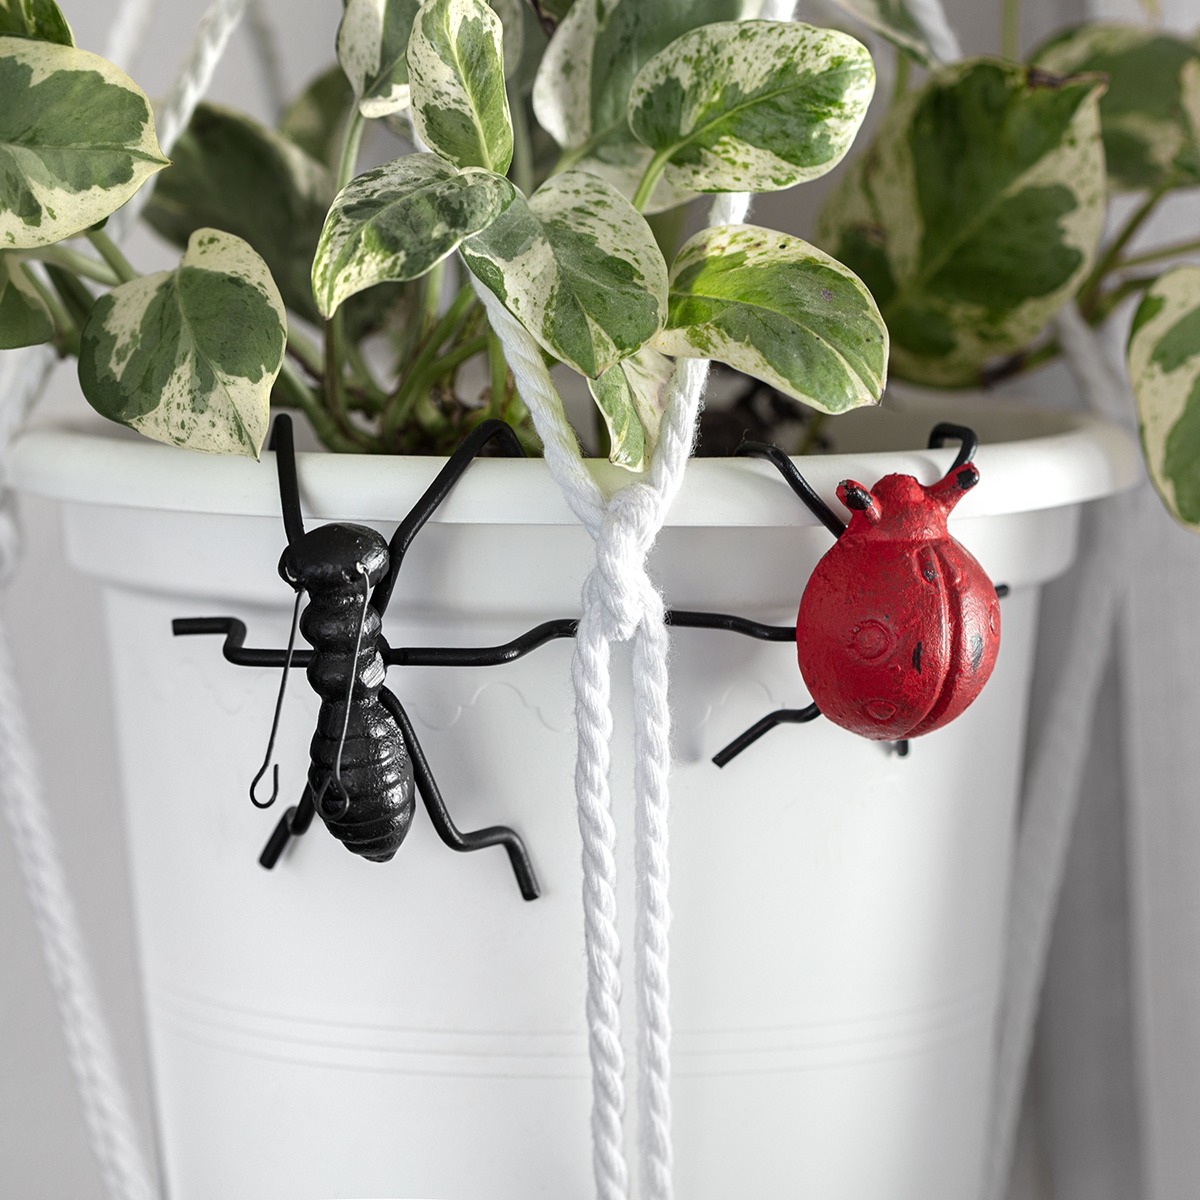 Ladybug and ant plant pot climber.